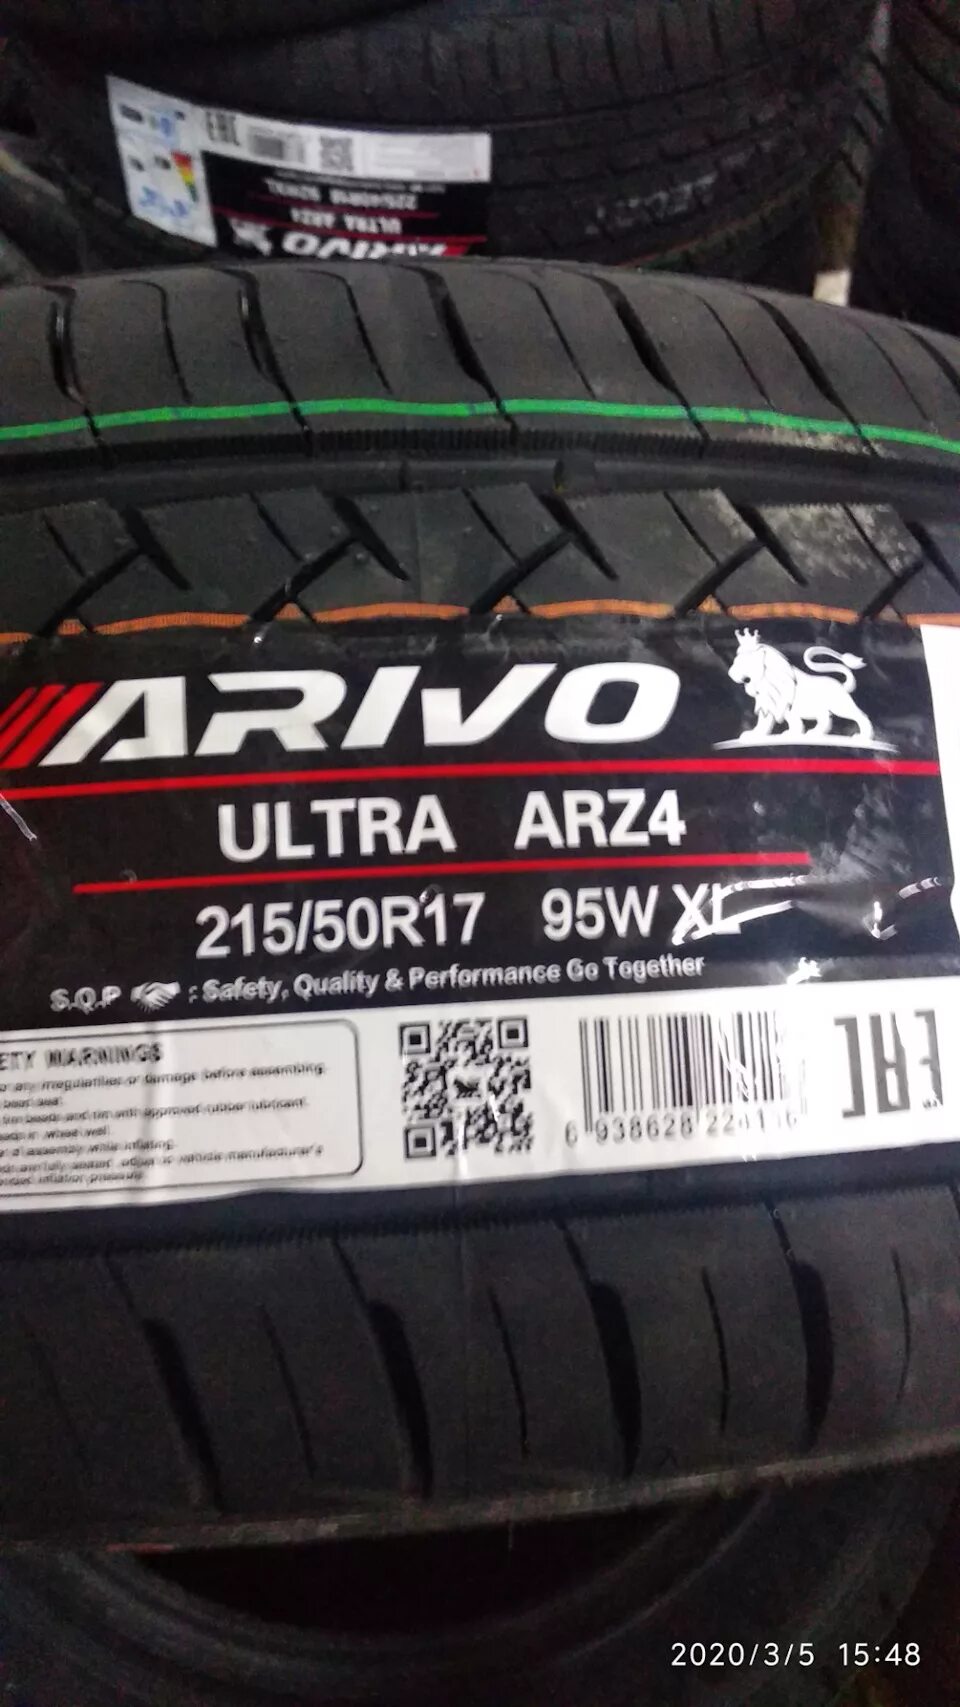 Arivo Ultra arz4 225/55 r17. Arivo Ultra arz4 шина. Arivo Ultra arz4 215/50 r17. Шина arivo Ultra arz4 235/40 r18 95w XL.